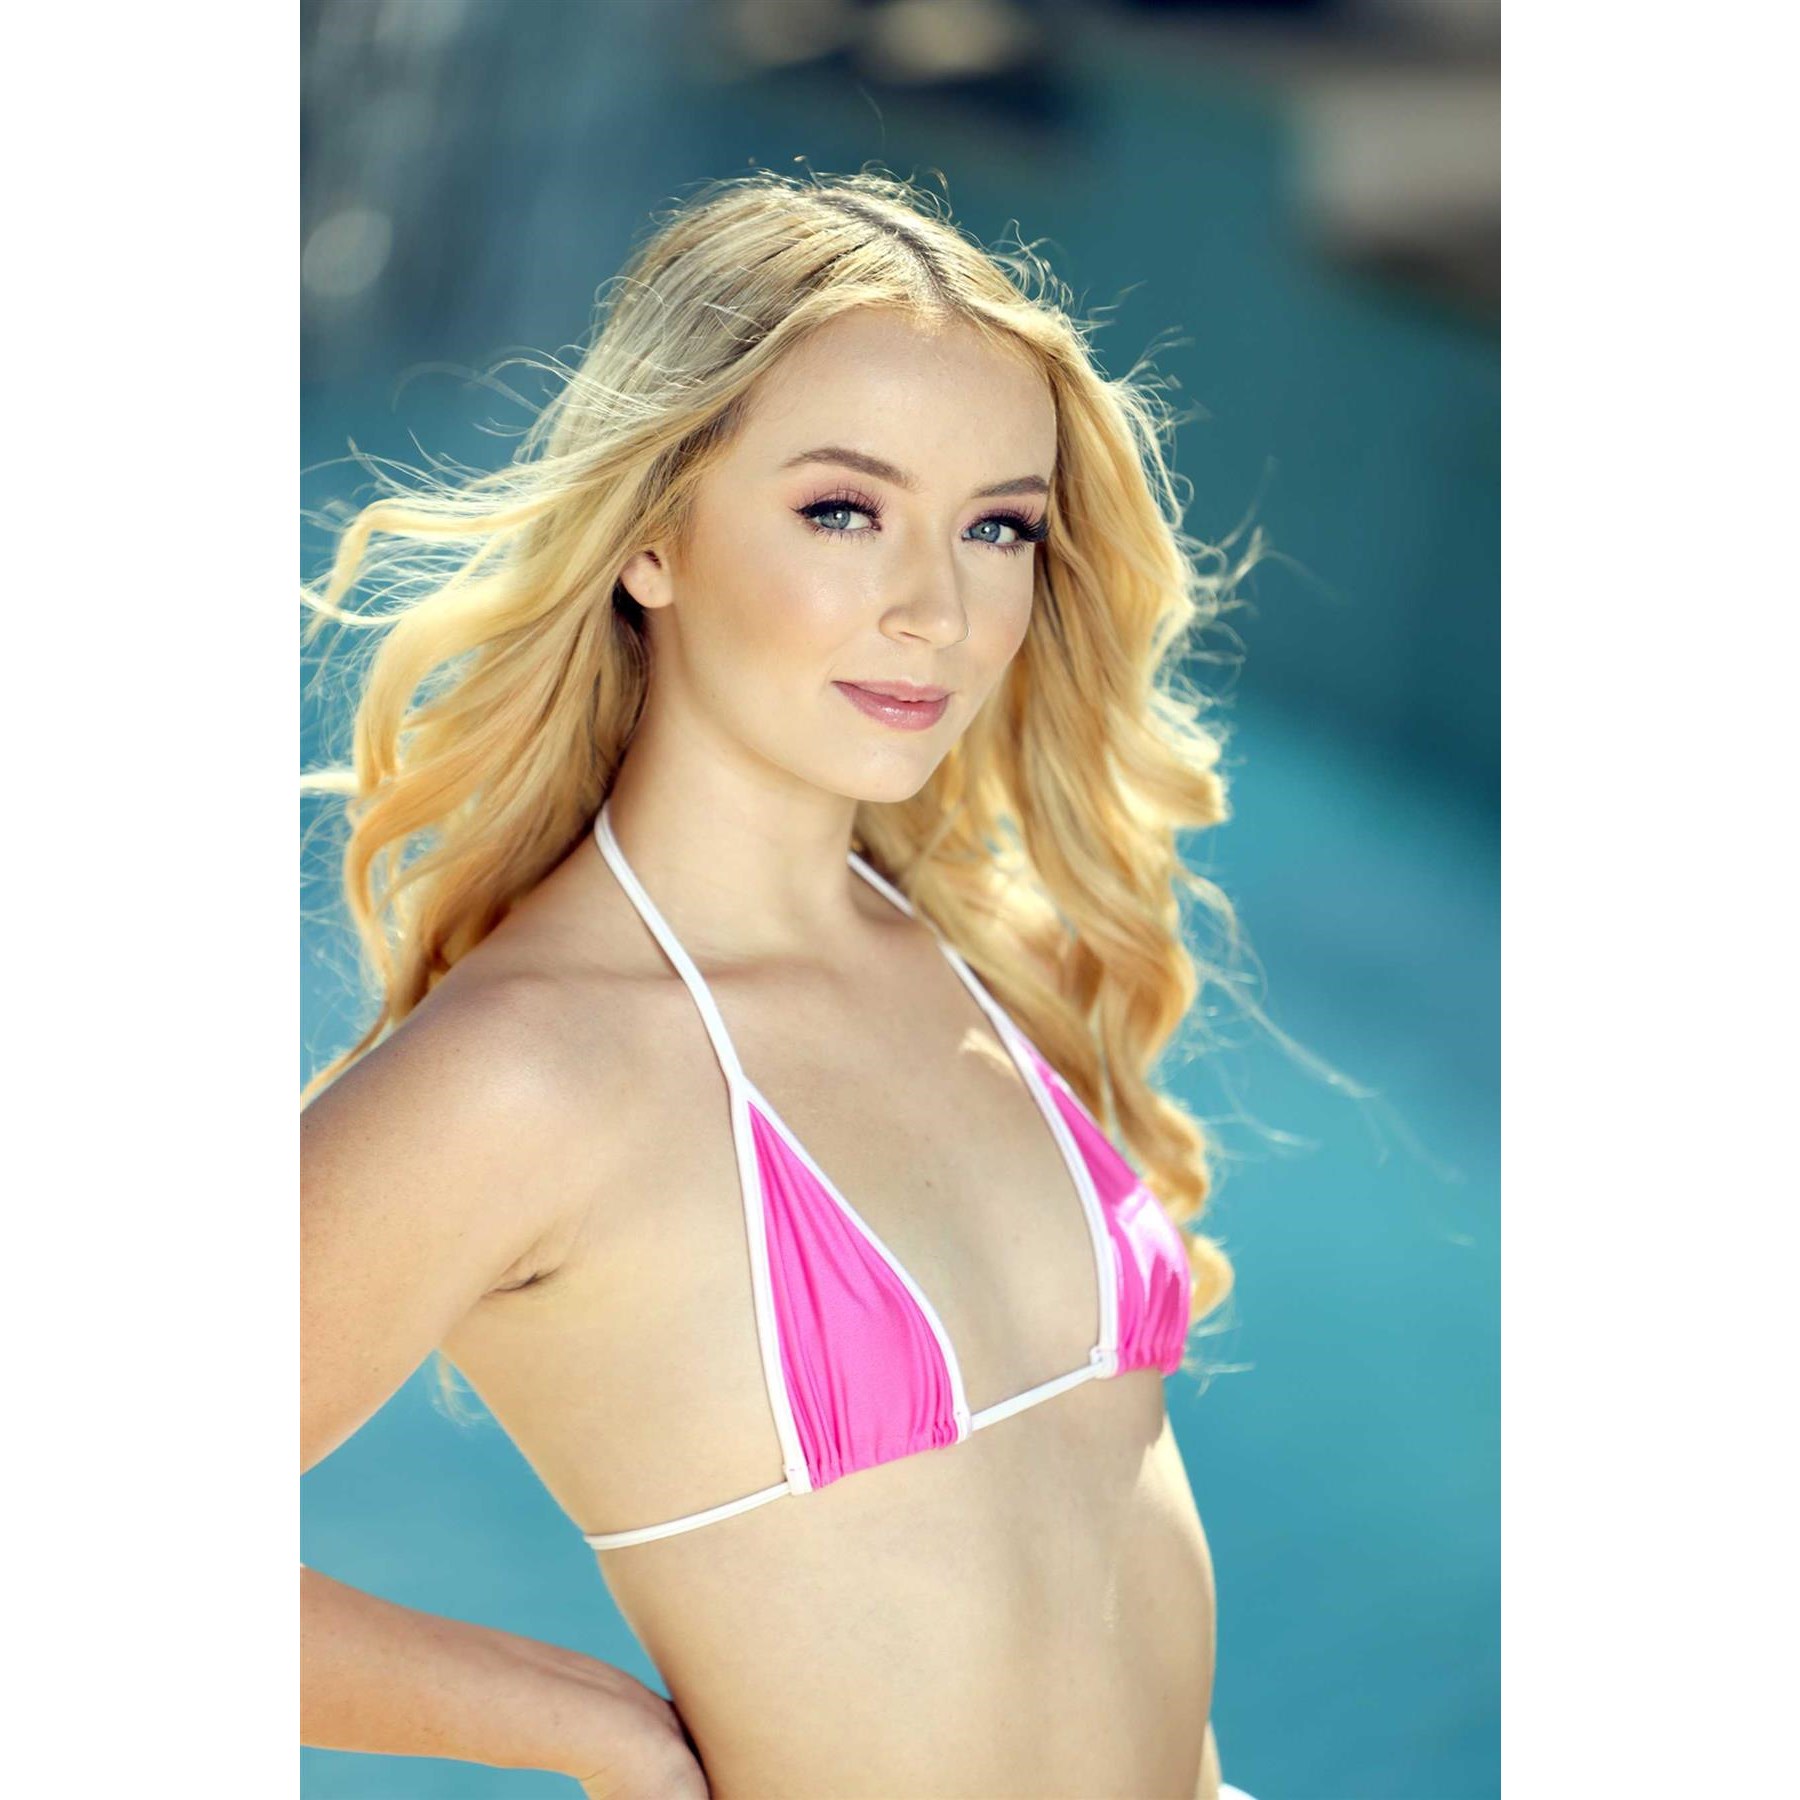 Blonde femlae wearing bikini top displaying cleavage